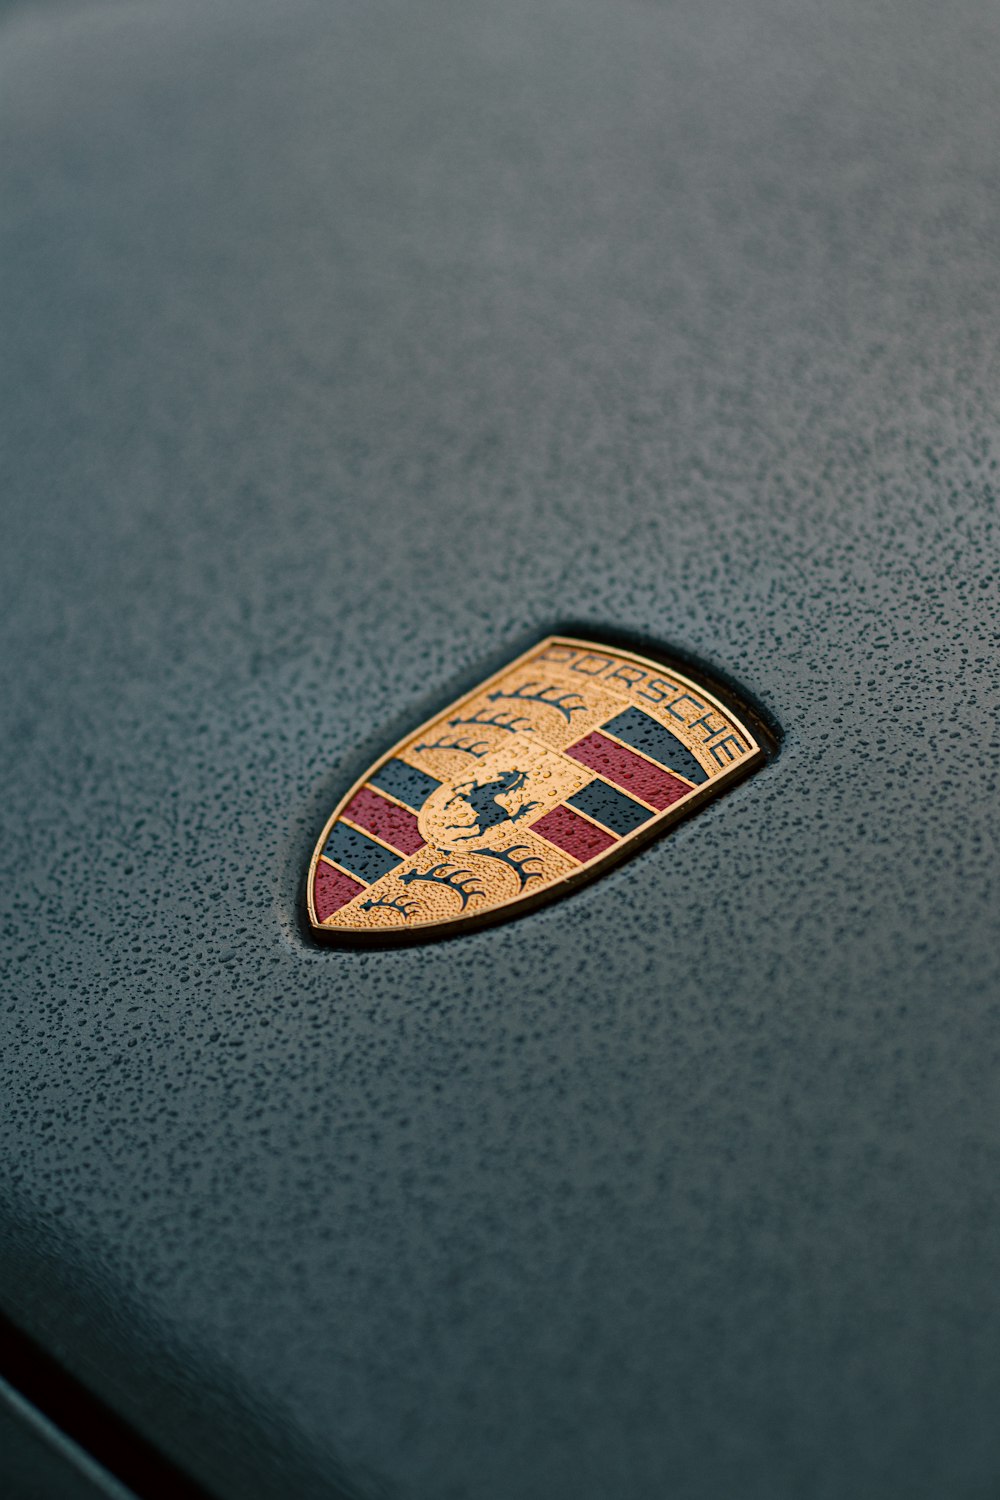 a badge on the hood of a car